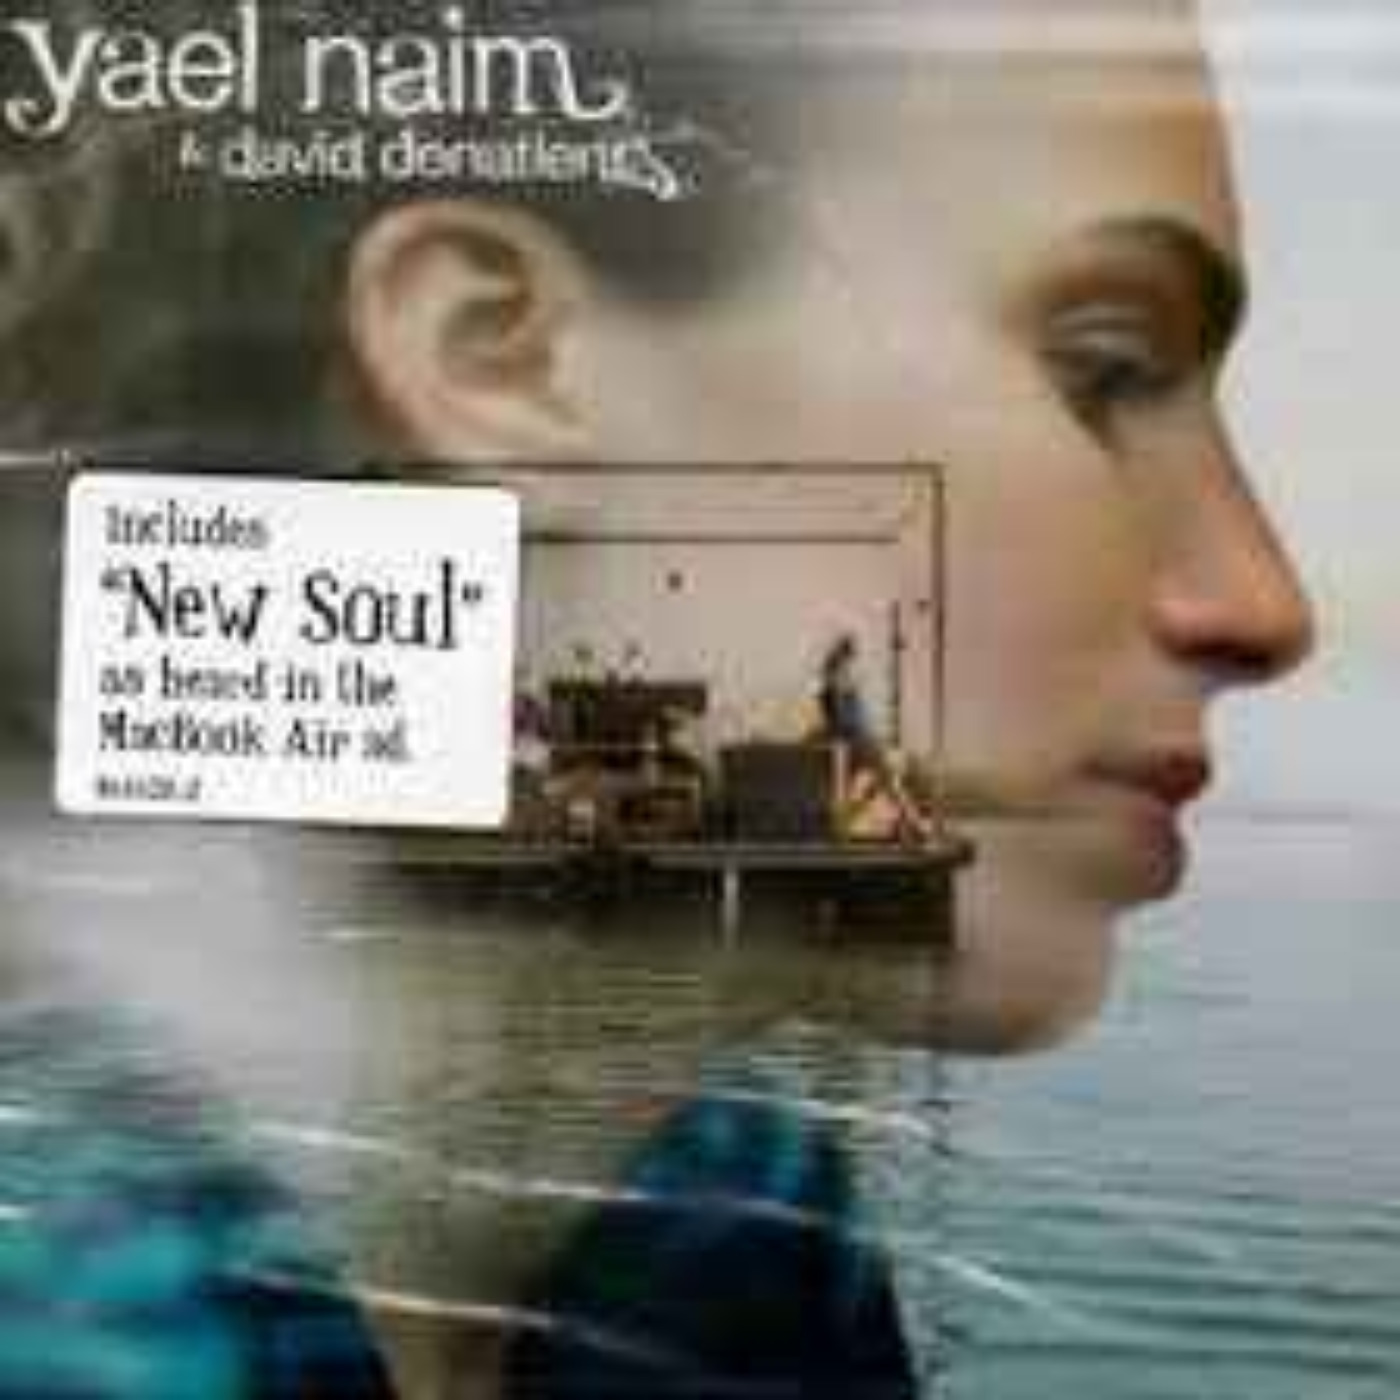 cover art for YAEL NAIM & DAVID DONATIEN interview